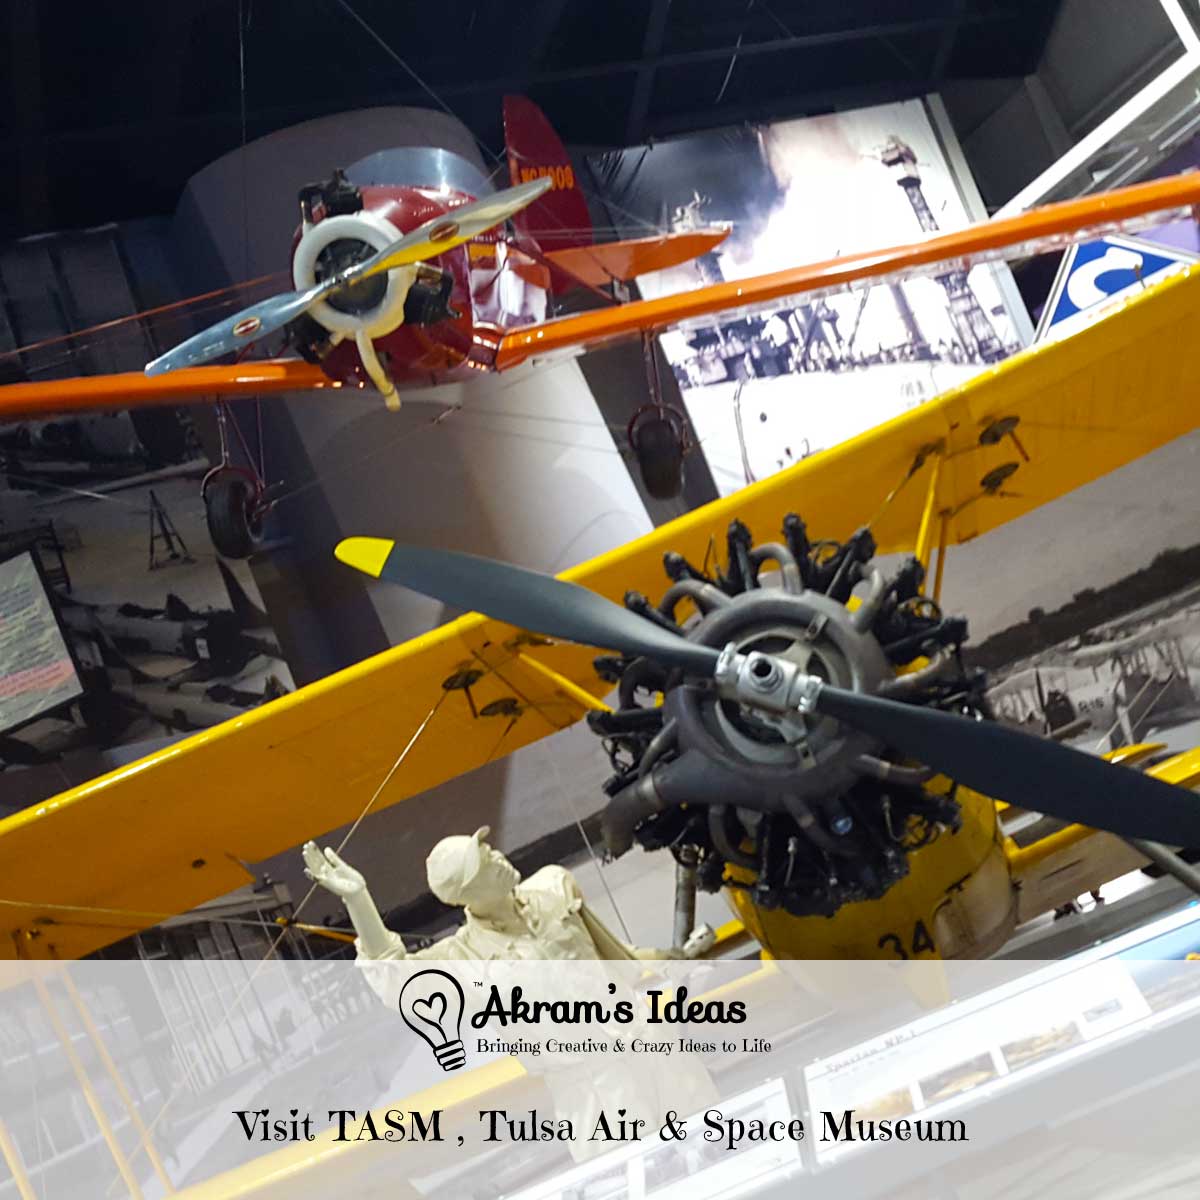 Review of TASM an aerospace museum in the heart of Tulsa Oklahoma. This facility includes tons of Oklahoma aerospace memorabilia and planetarium.